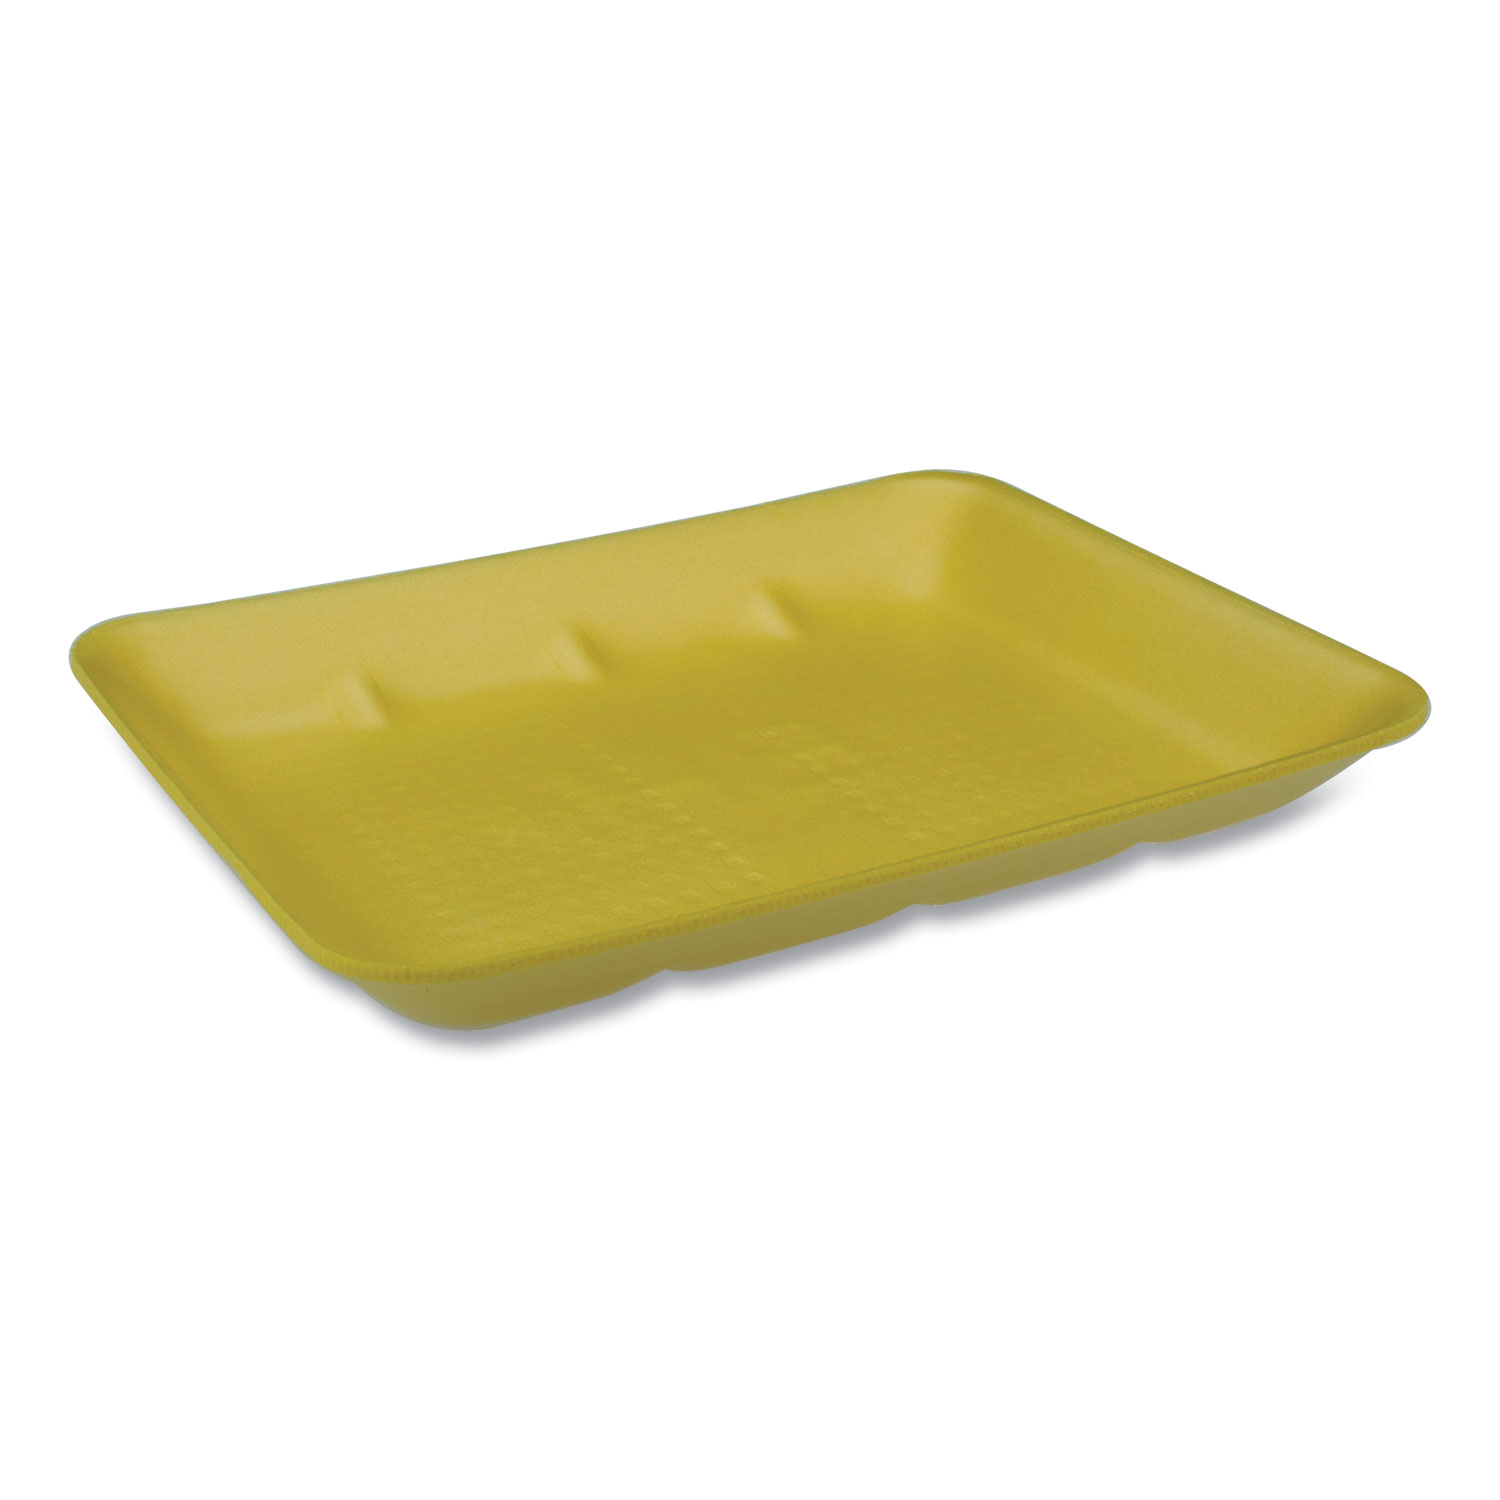  Pactiv 0TF304D10000 Supermarket Tray, #4D1, 9.5 x 77 x 1.25, Yellow, 500/Carton (PCT0TF304D10000) 